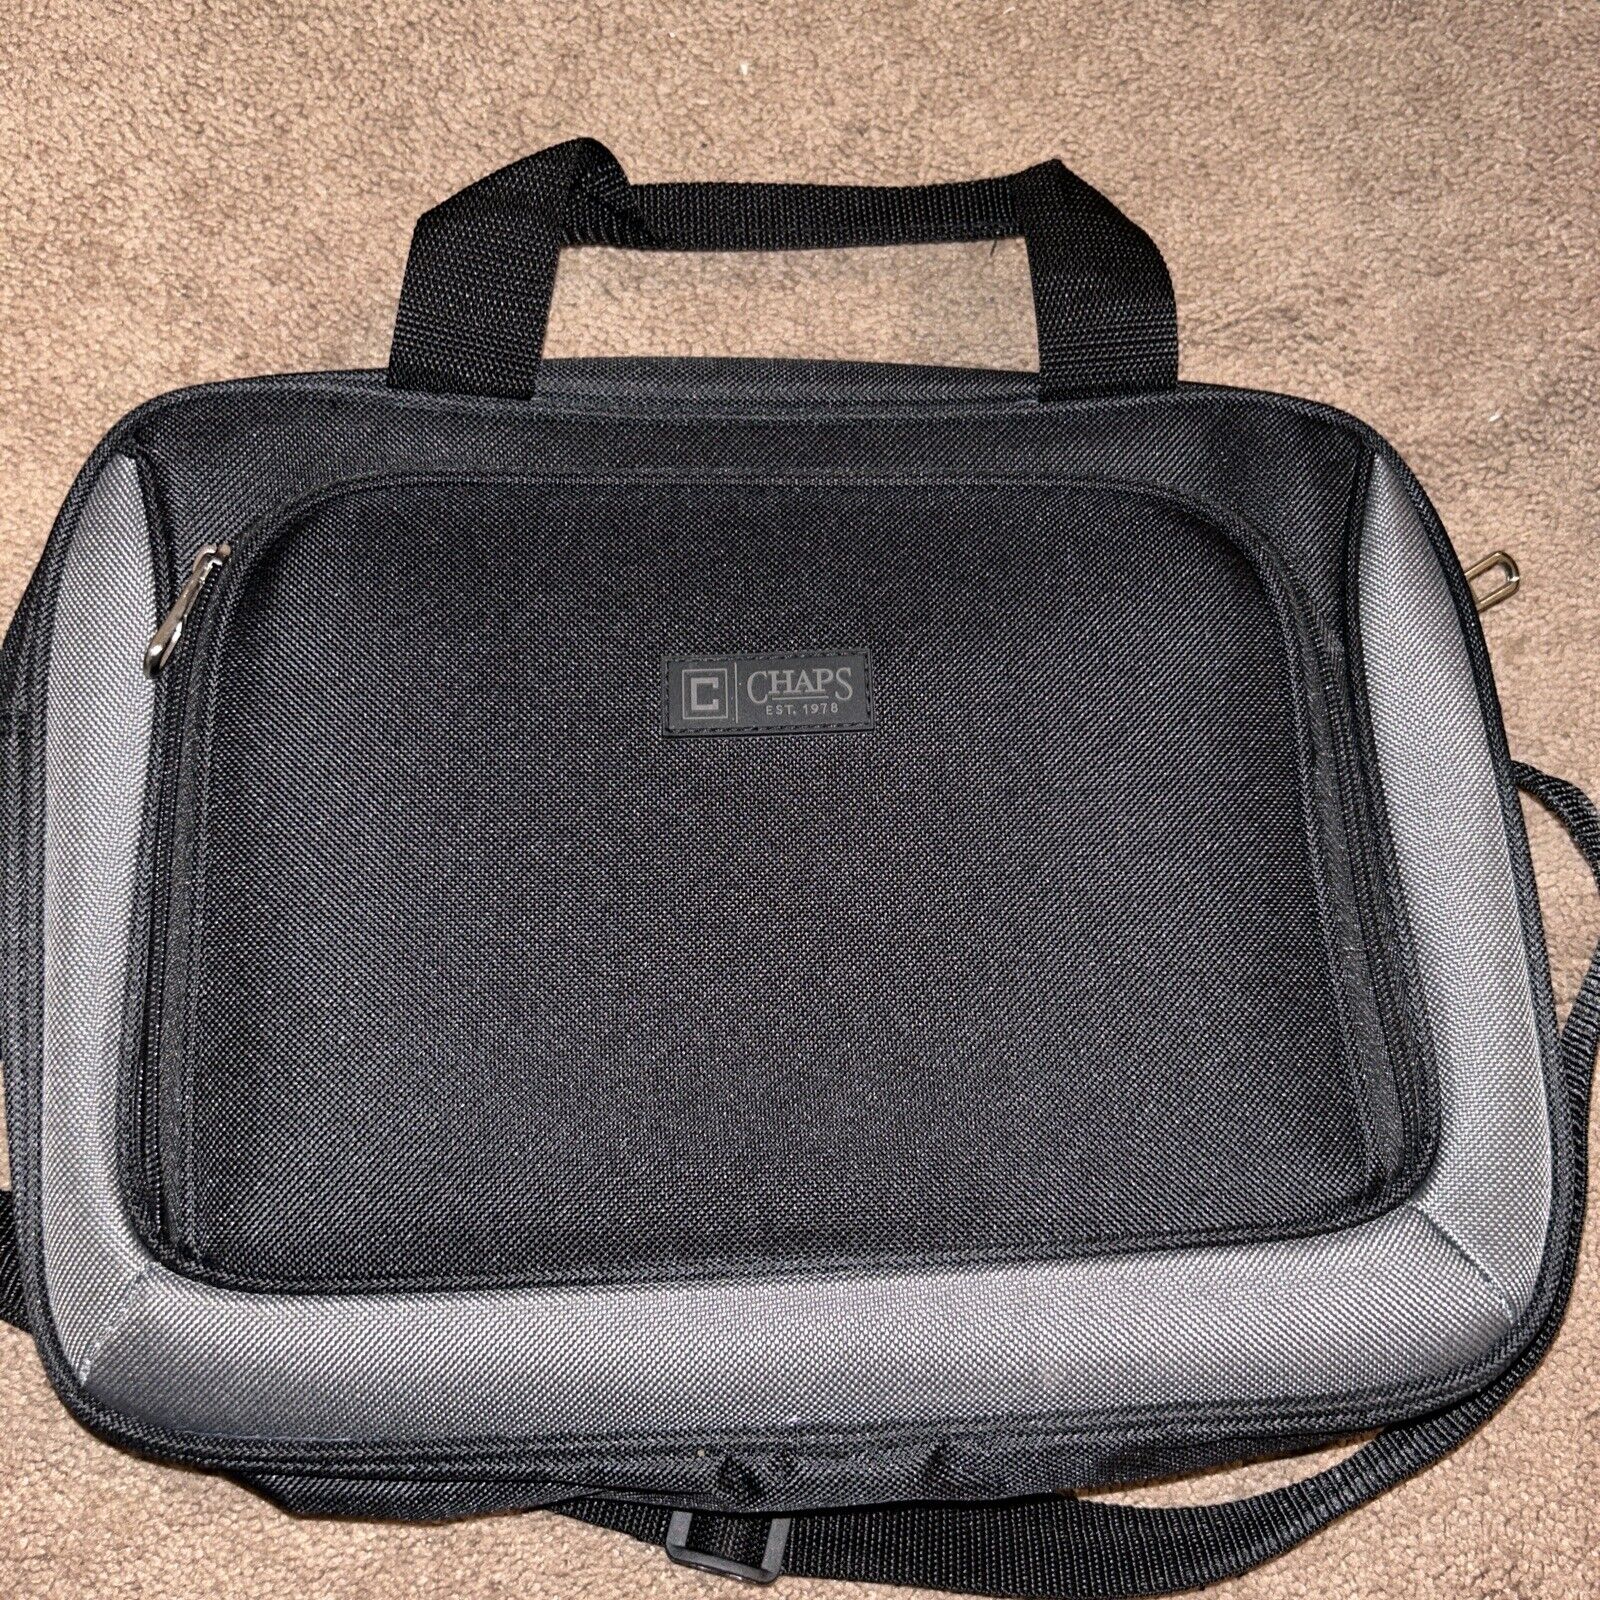 Vintage Travel Bag Crossbody CHAPS Computer School BLACK Tote 14 1/2” X 10”